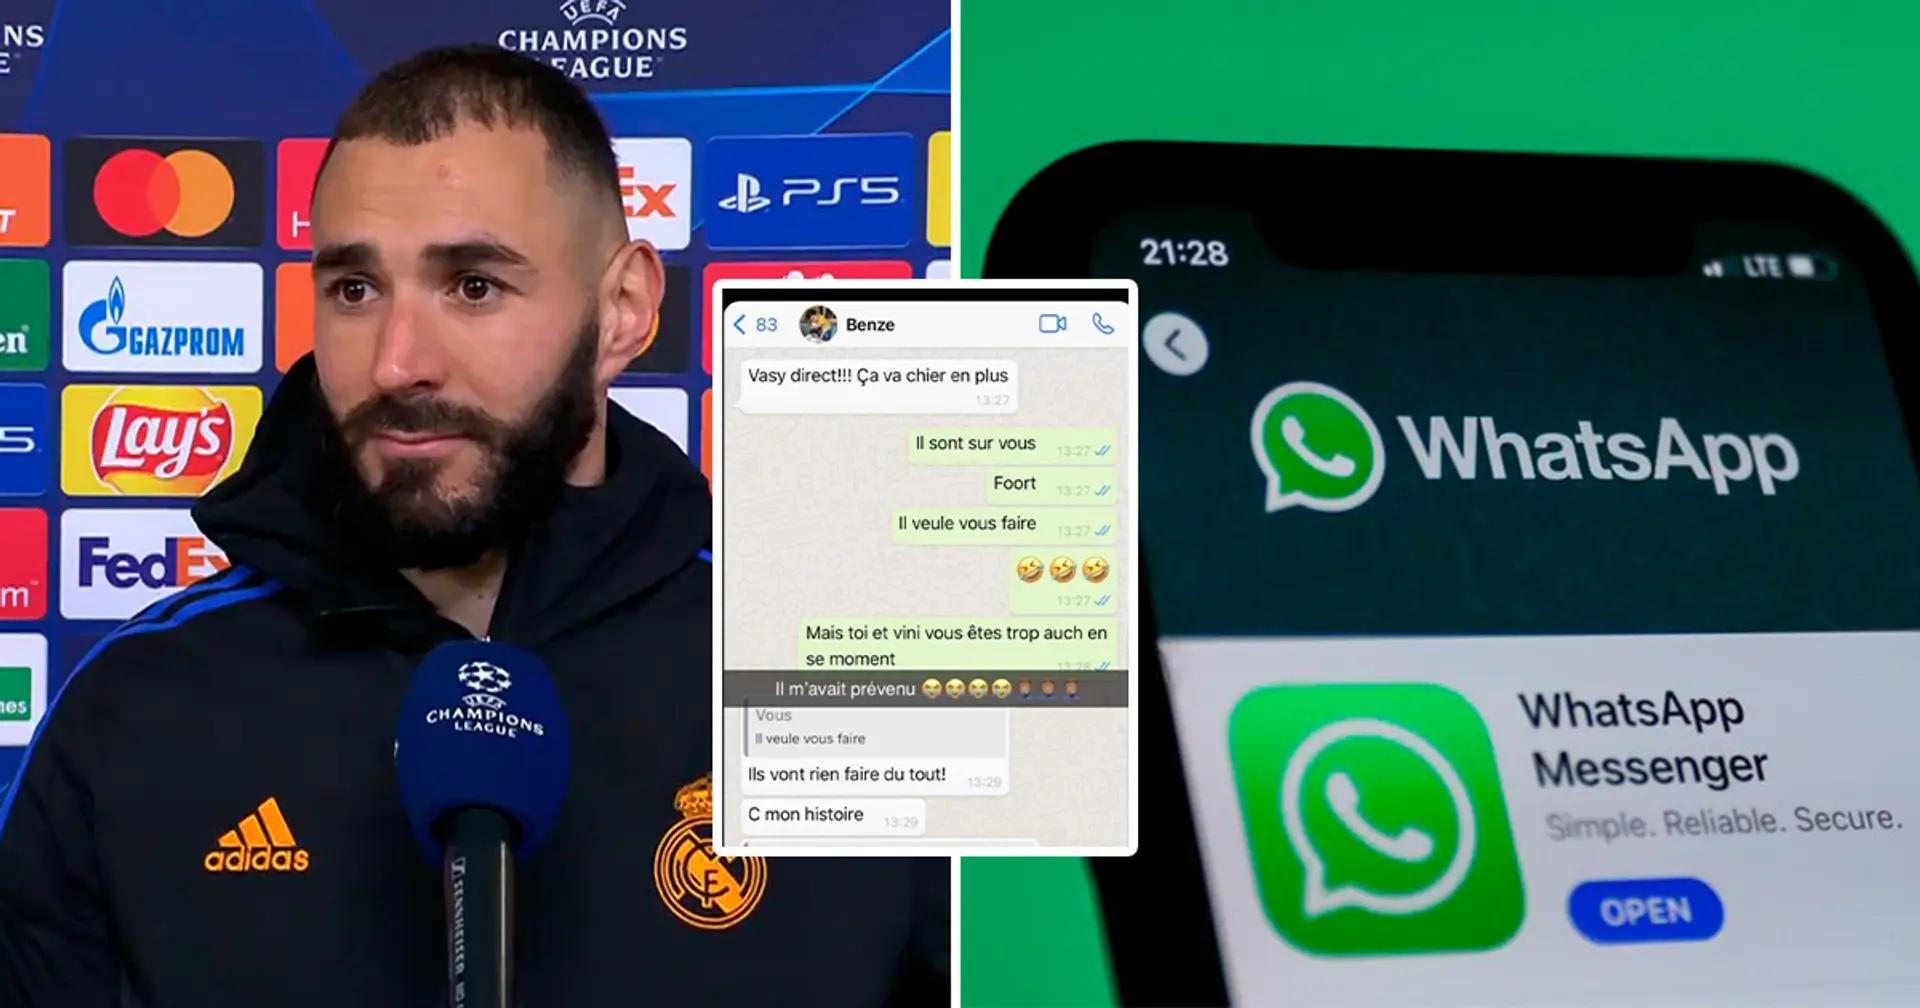 Karim Benzema's leaked Whatsapp conversation shows he predicted PSG heroics